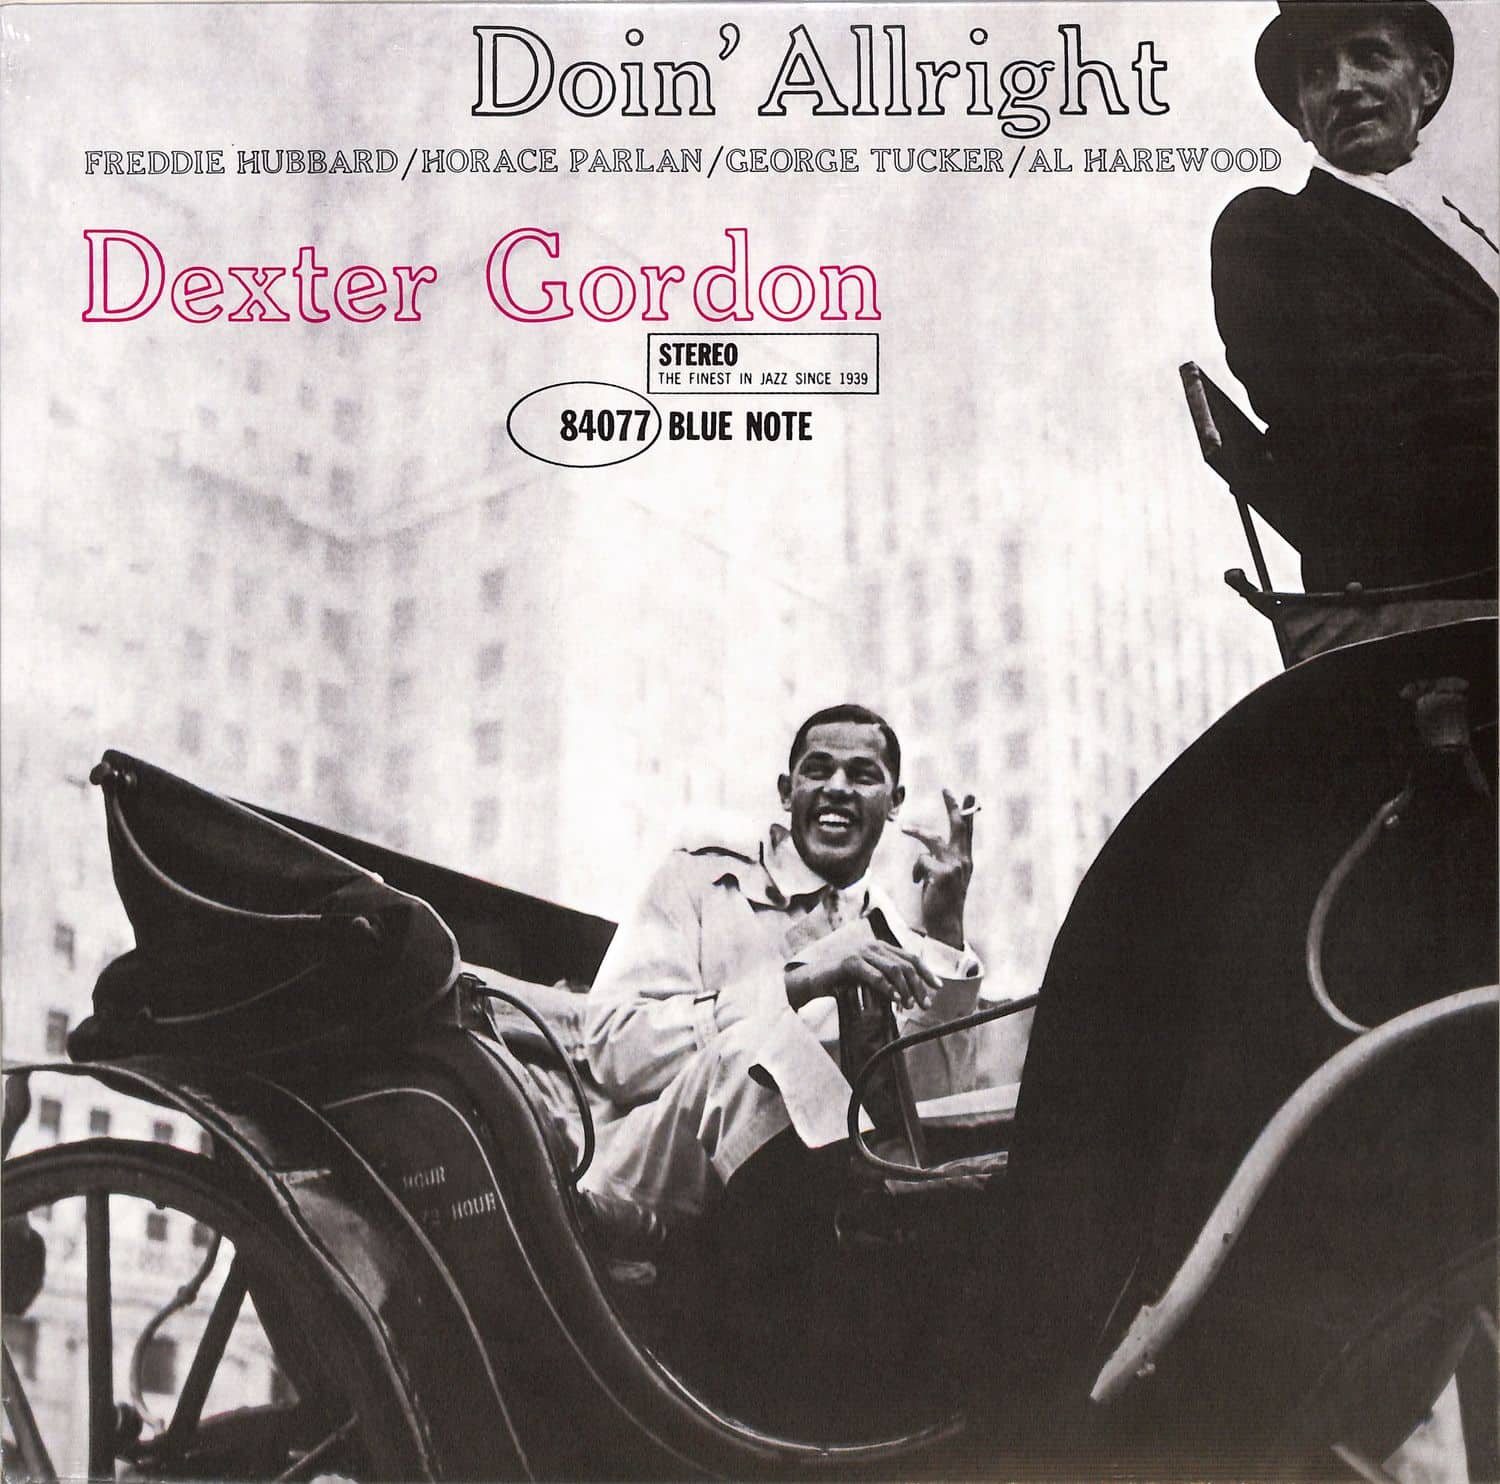 Dexter Gordon - DOIN ALLRIGHT 